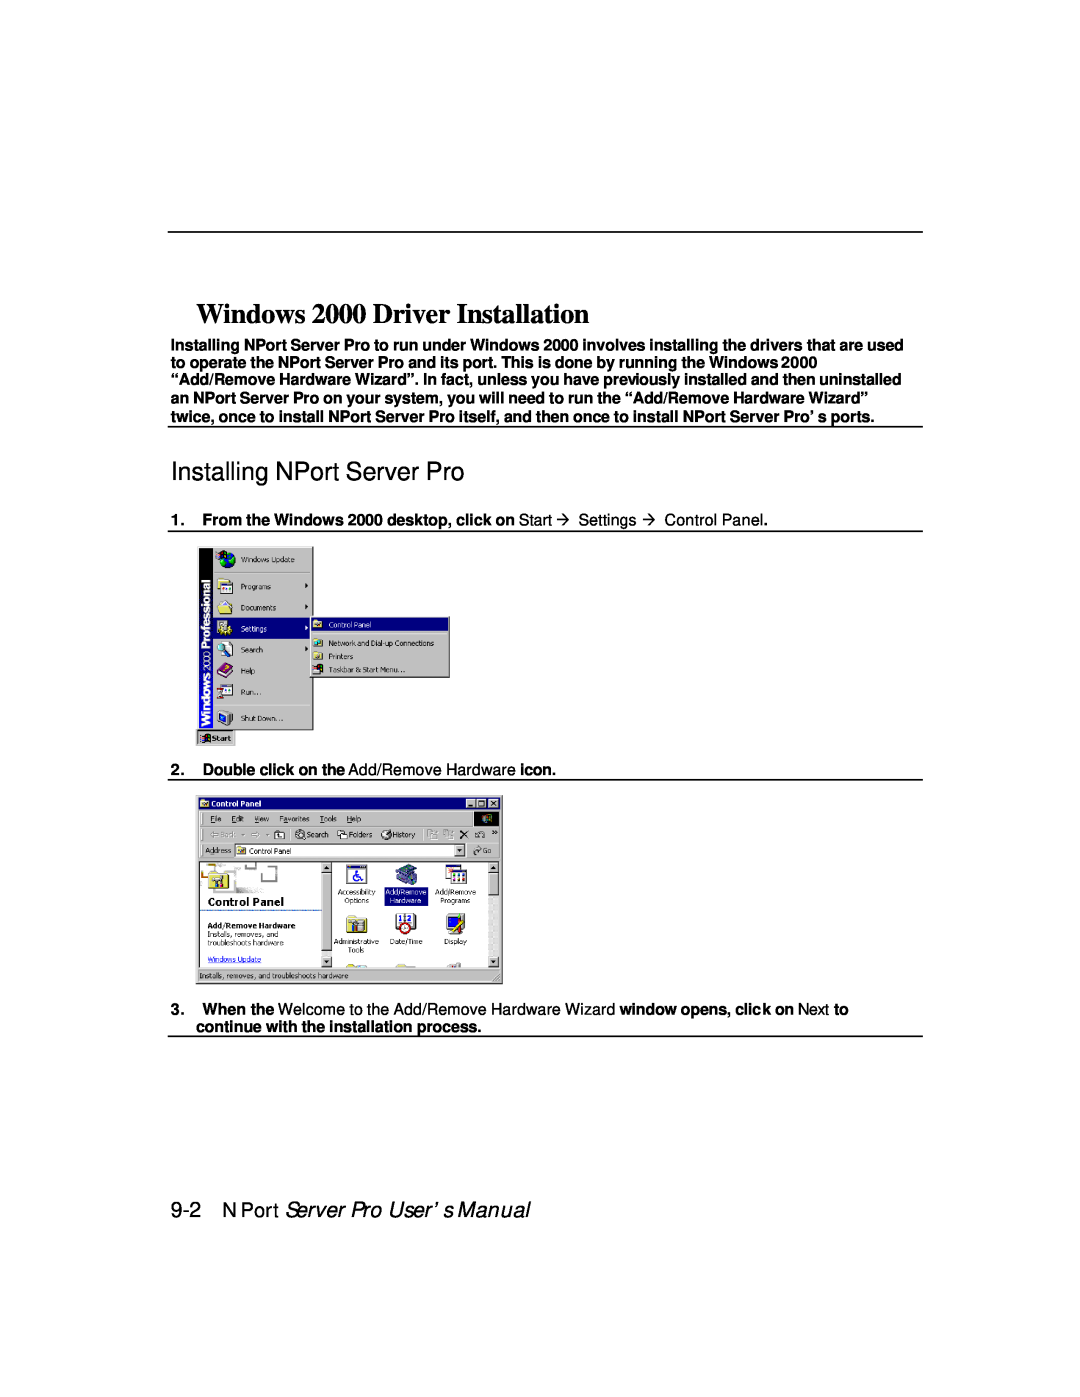 Moxa Technologies DE-303 Installing NPort Server Pro, NPort Server Pro User’s Manual, Windows 2000 Driver Installation 